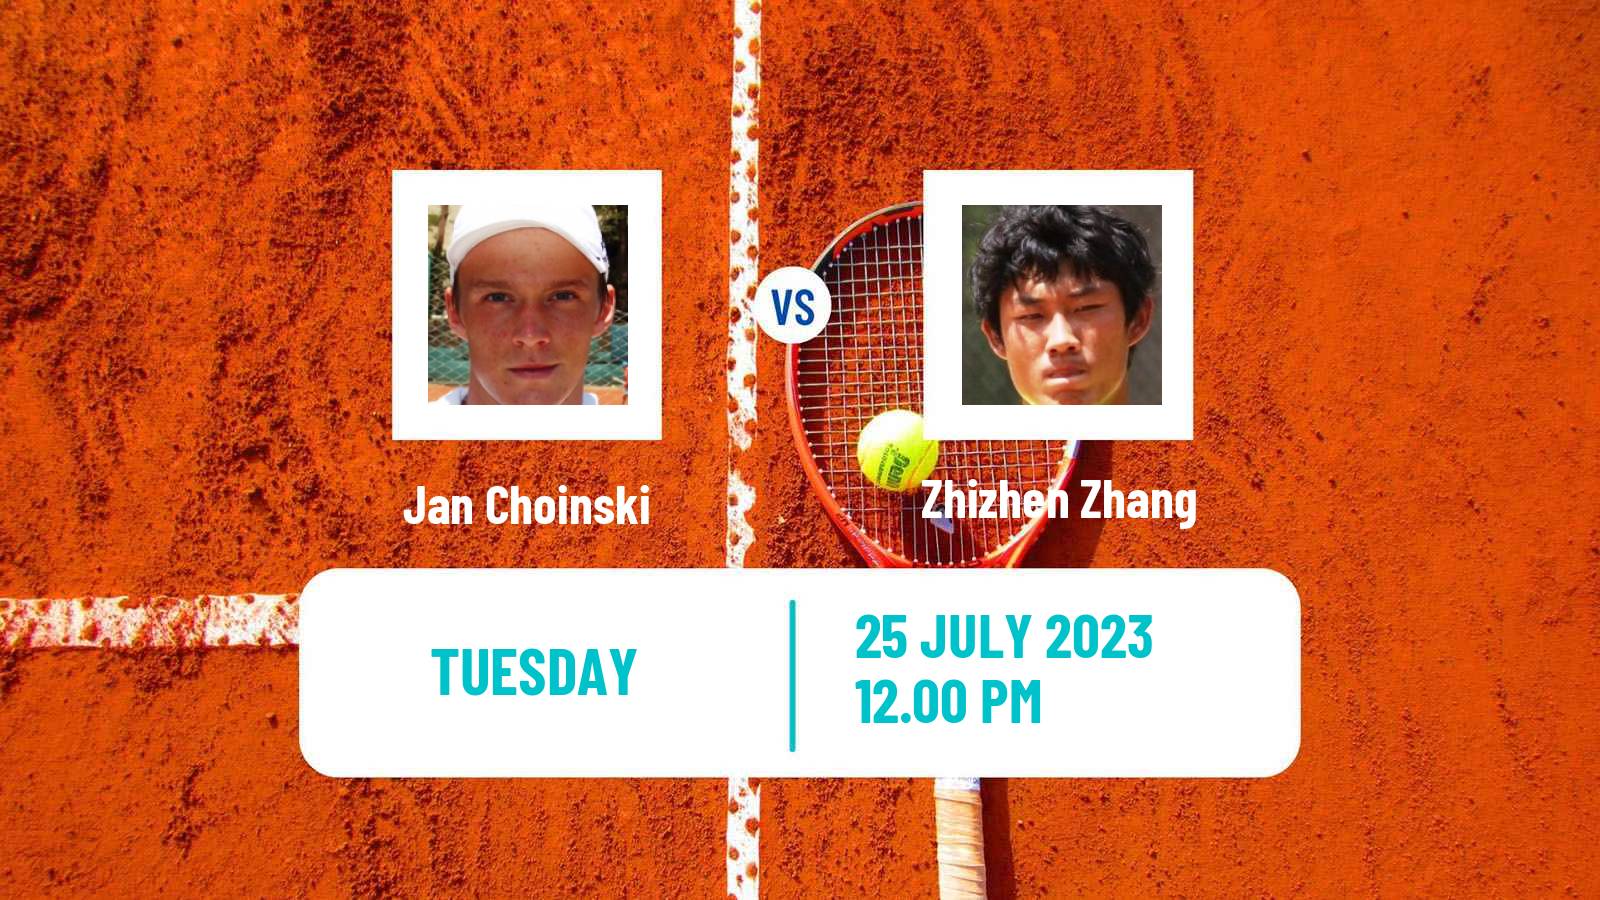 Tennis ATP Hamburg Jan Choinski - Zhizhen Zhang